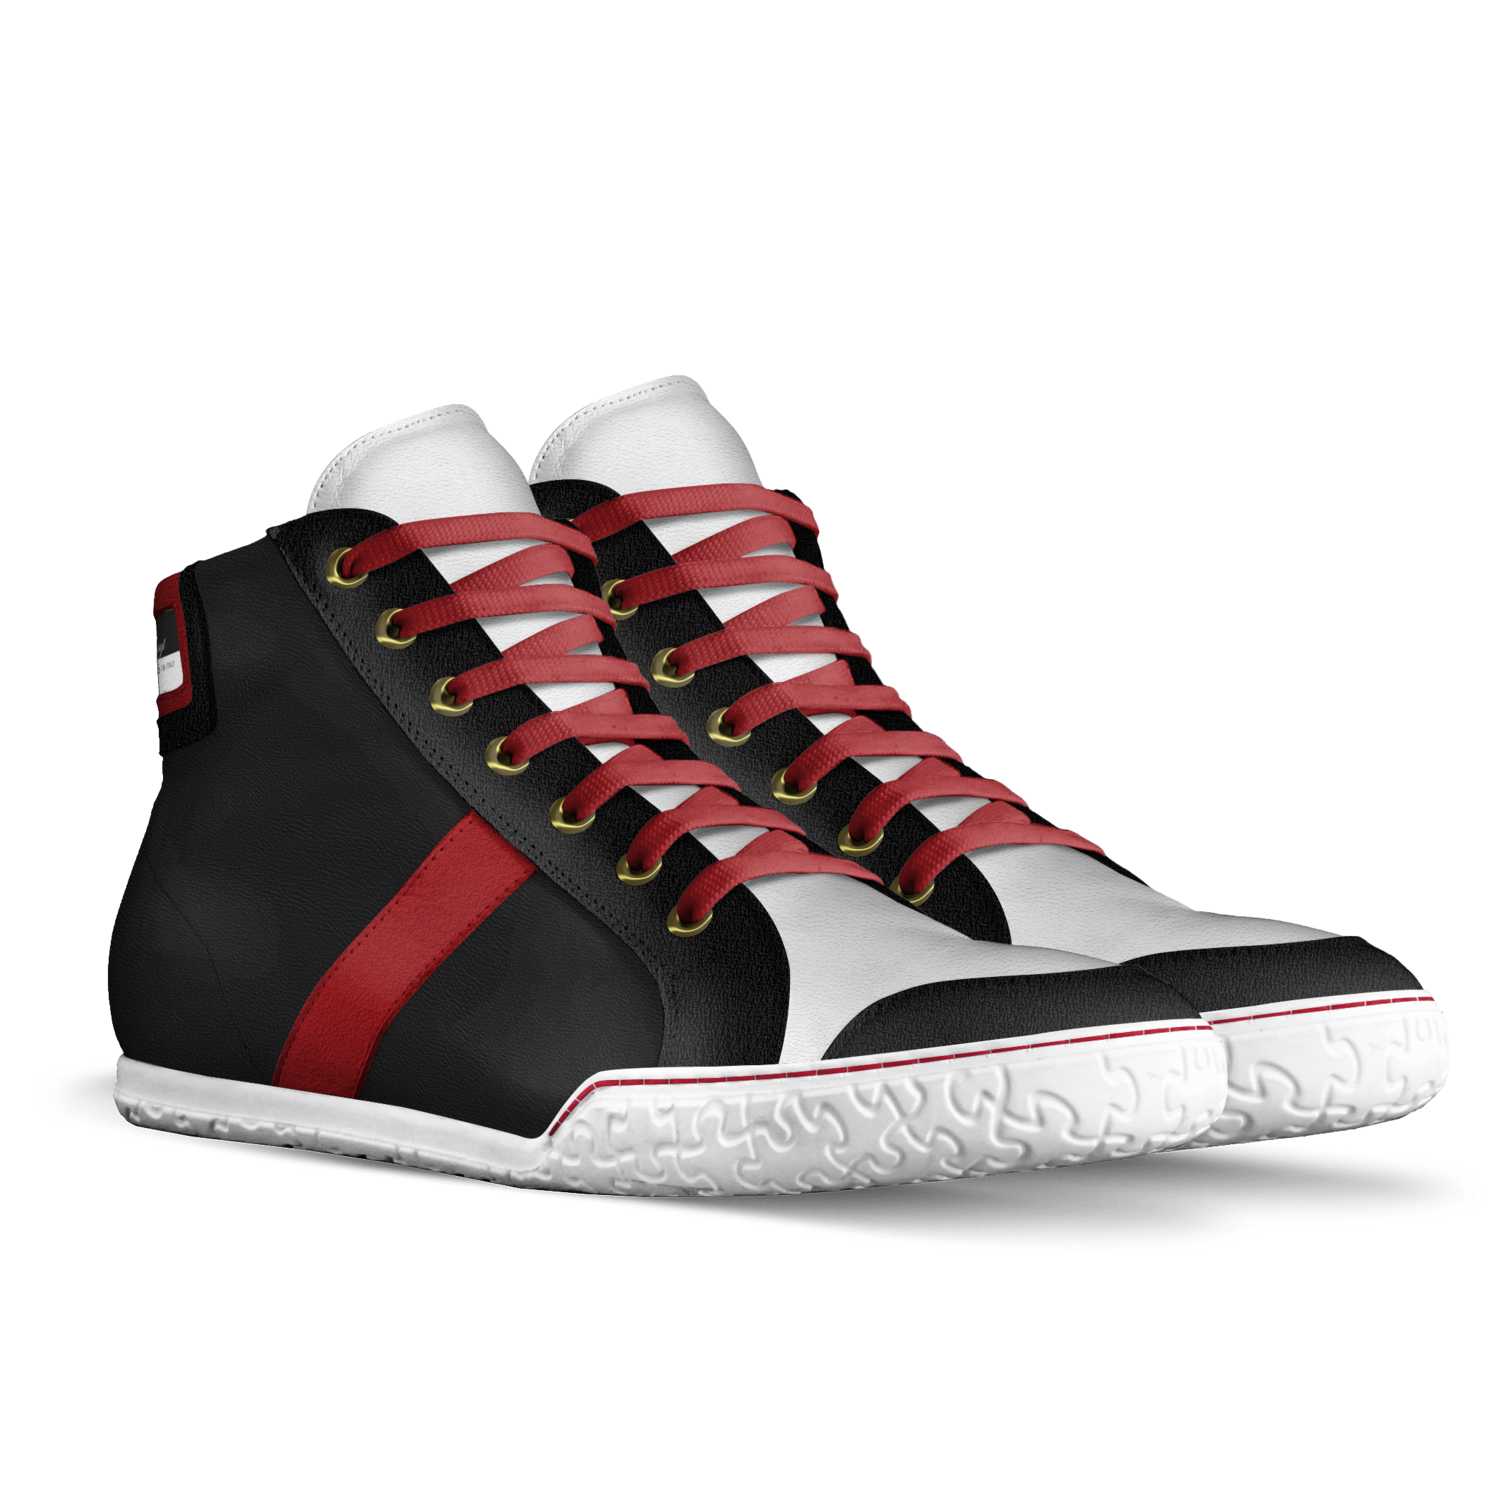 Madesyt | A Custom Shoe concept by Madesyt Footwear